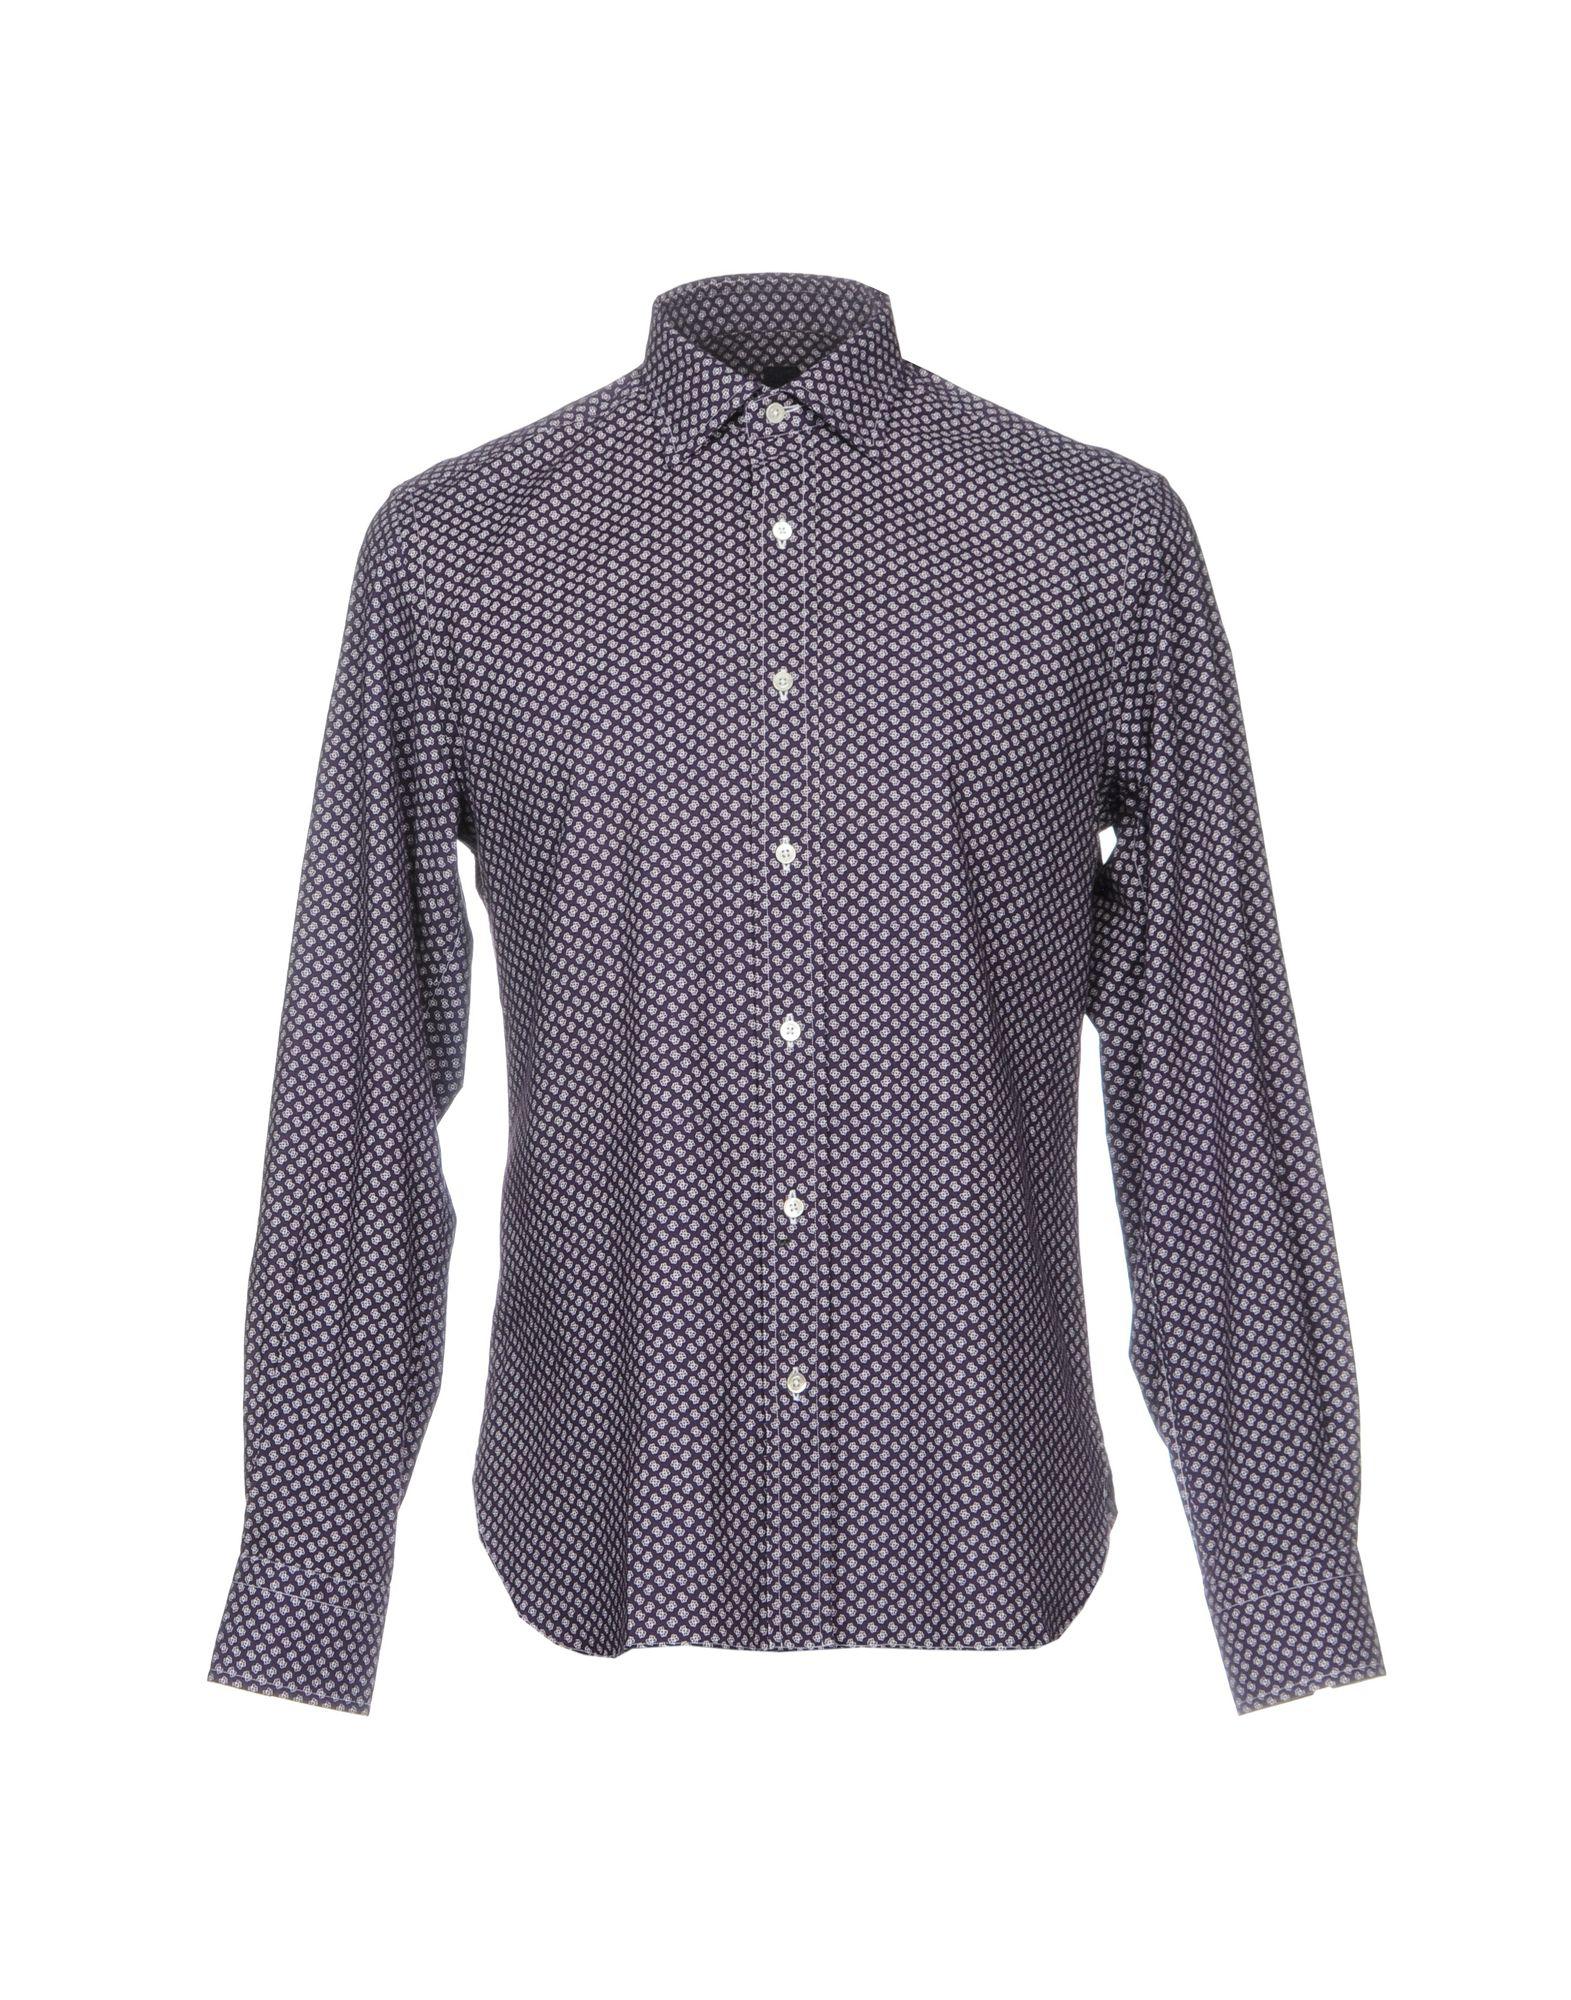 Mp Massimo Piombo Cotton Shirt in Dark Purple (Purple) for Men - Lyst